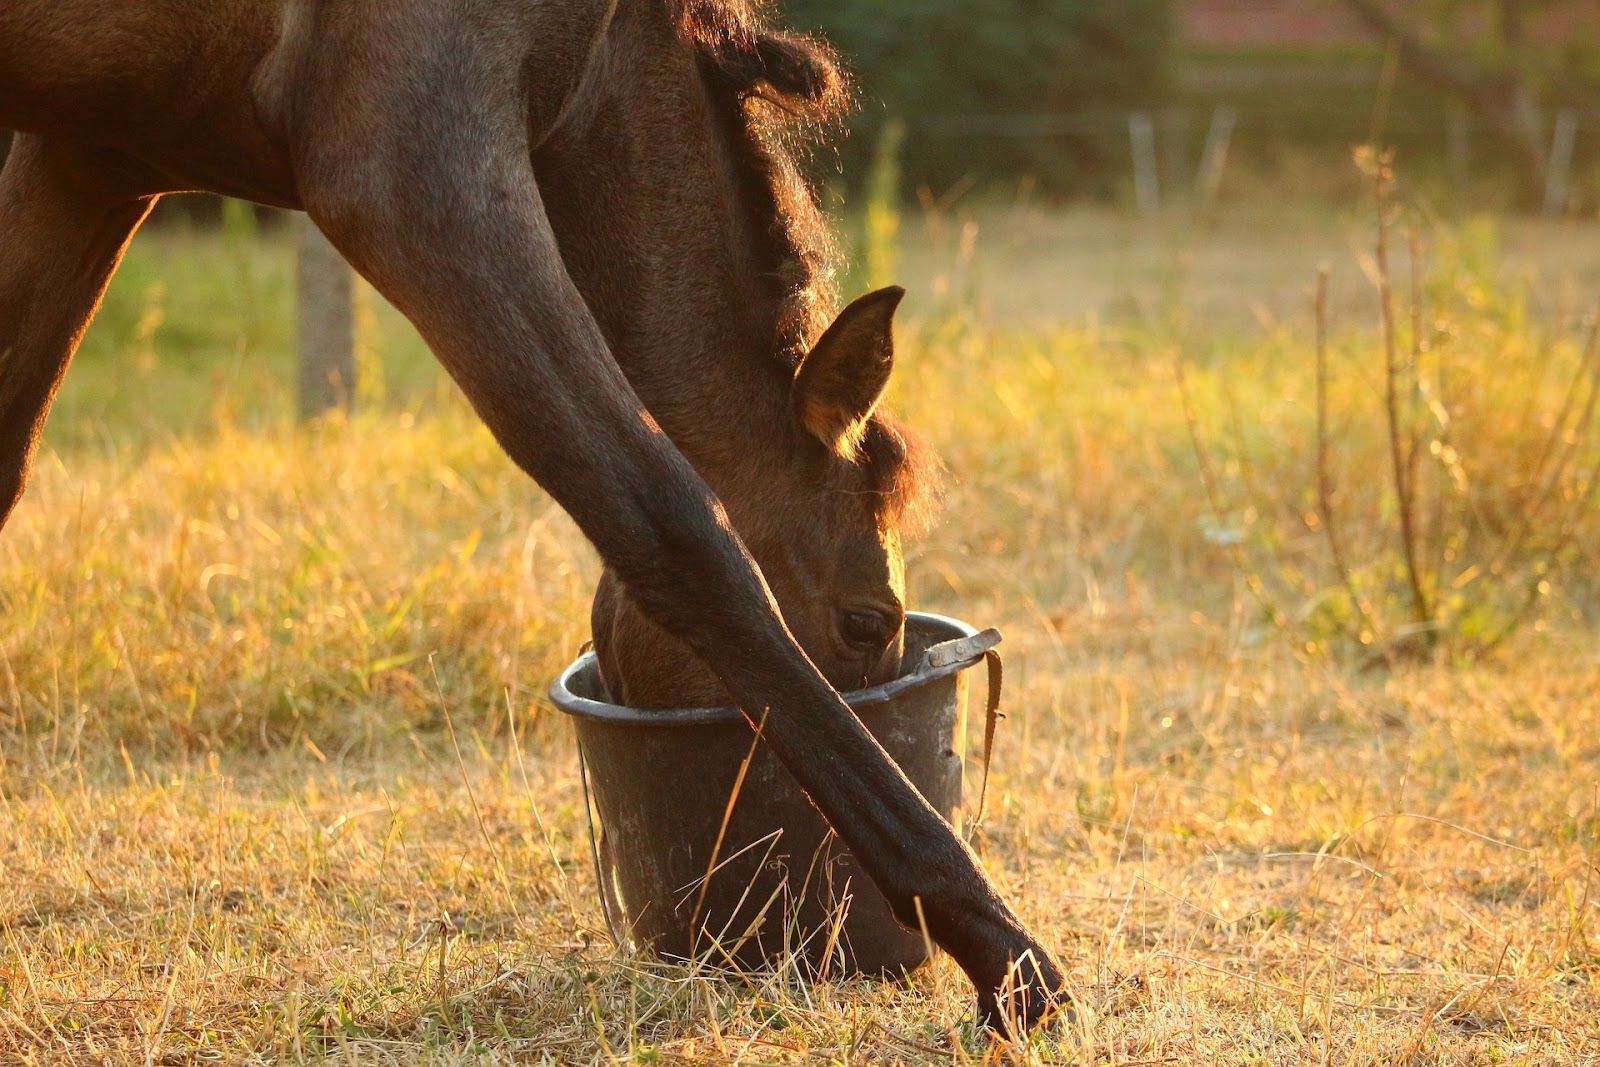 bay performance horse eats grain from a bucket